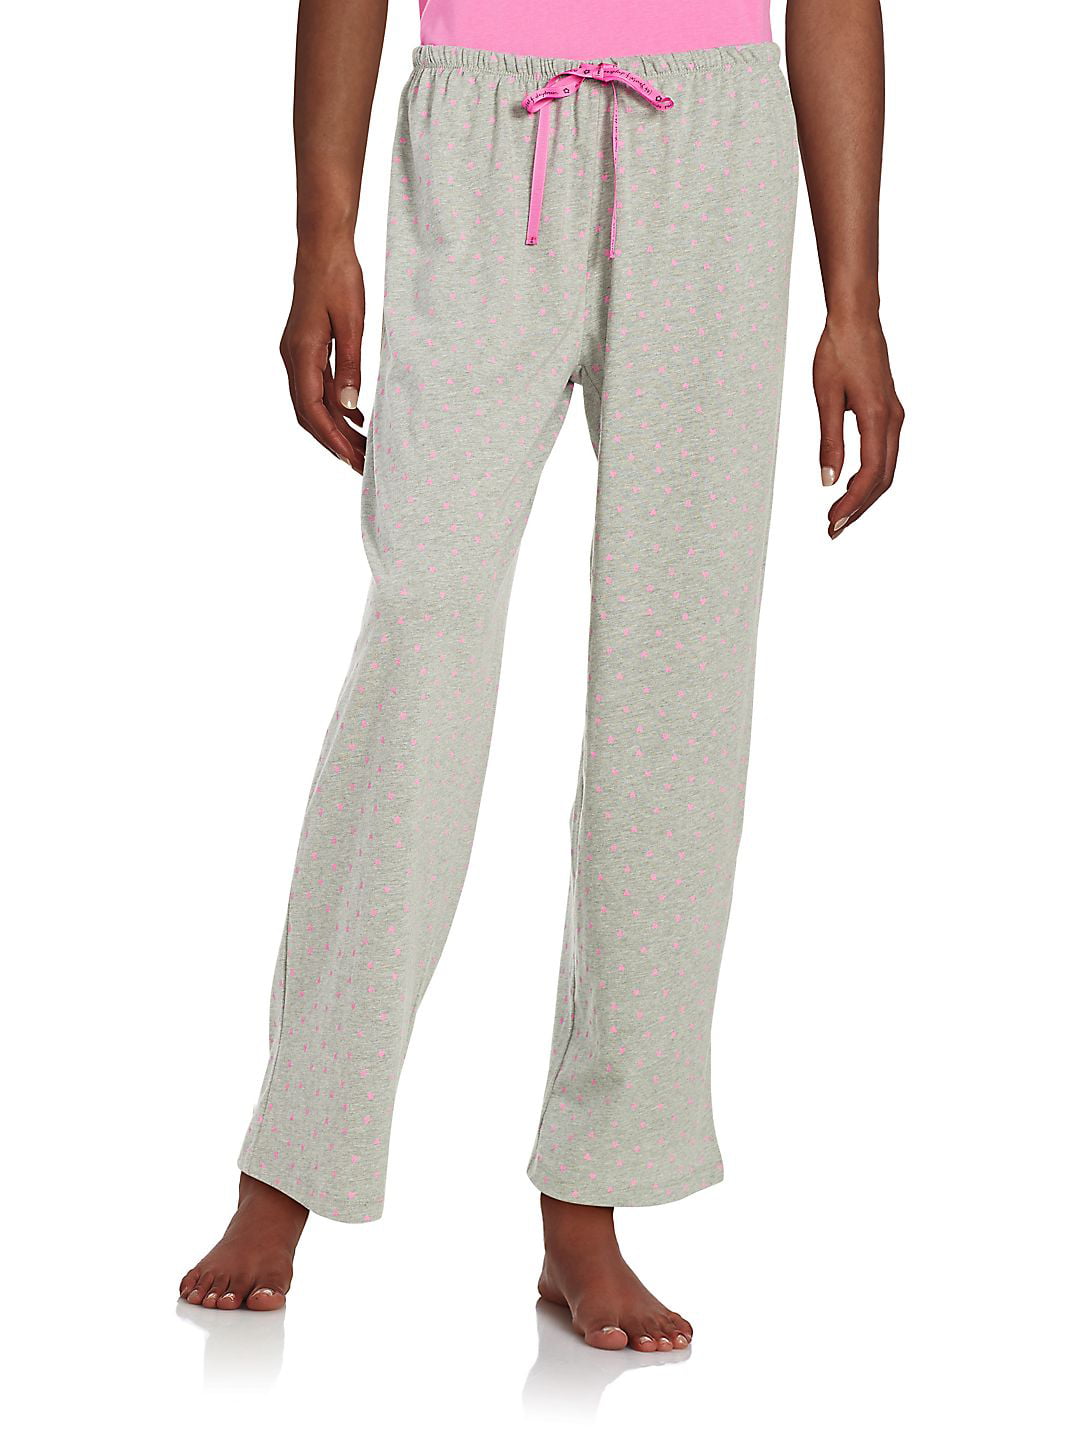 Heart Patterned Pajama Pants - Walmart.com